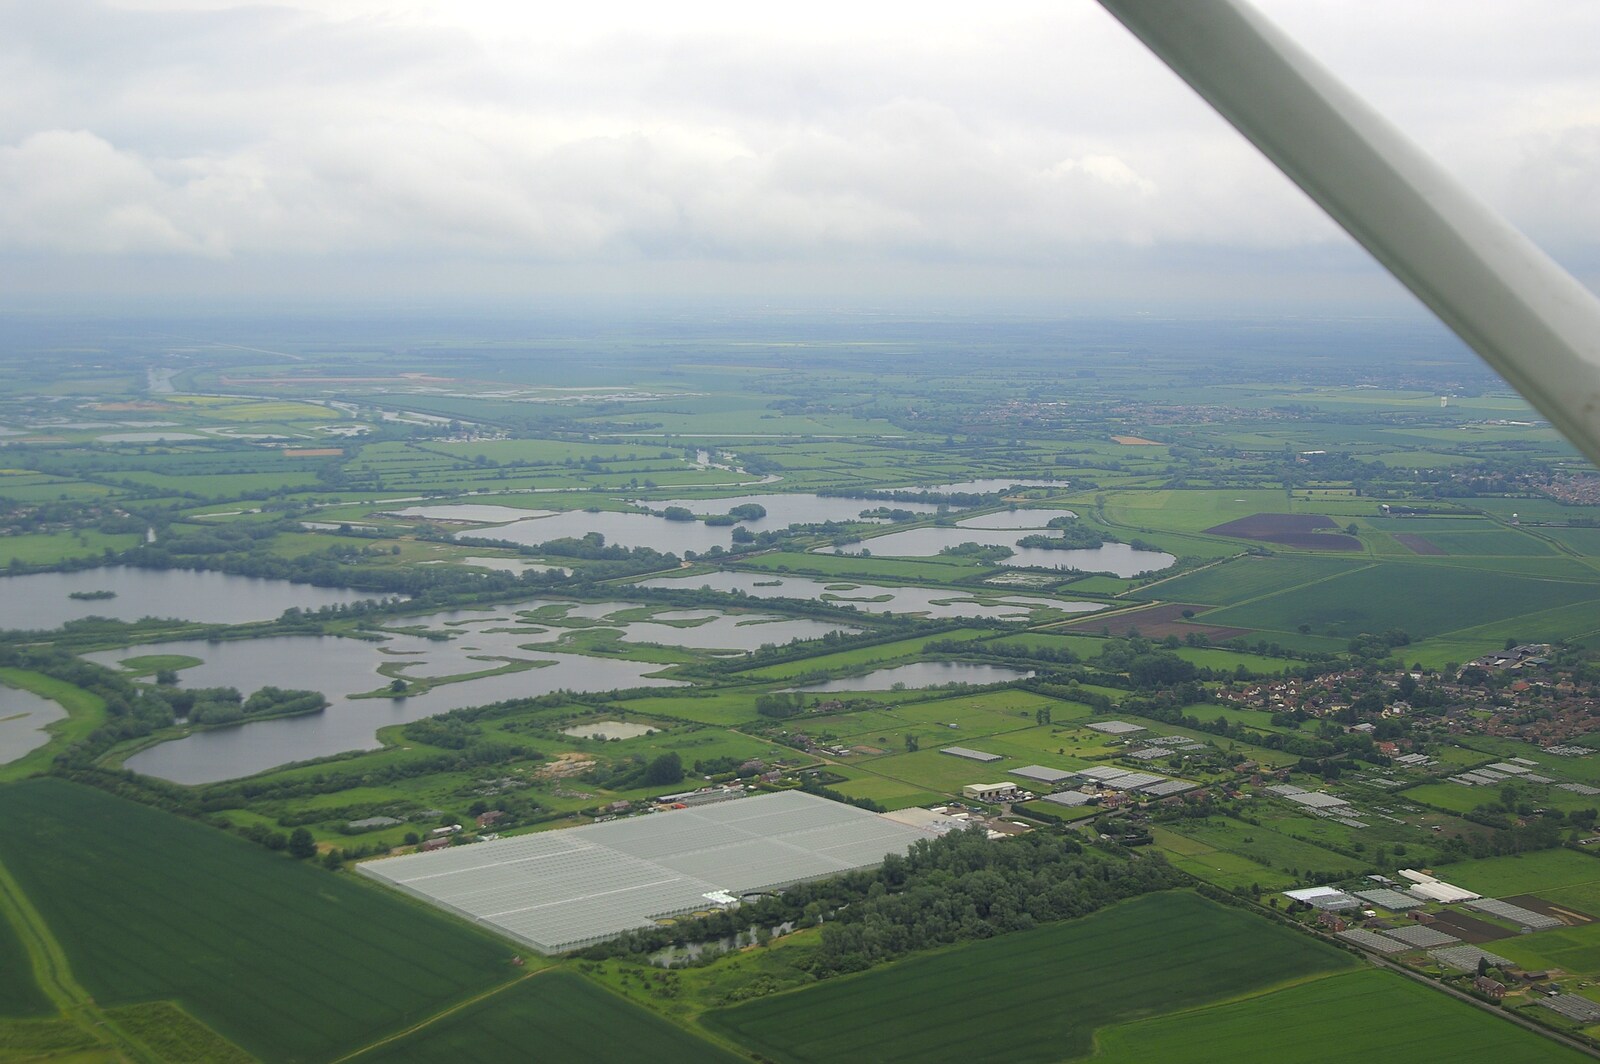 Nosher Flies a Plane, Cambridge Airport, Cambridge - 28th May 2008: More floods